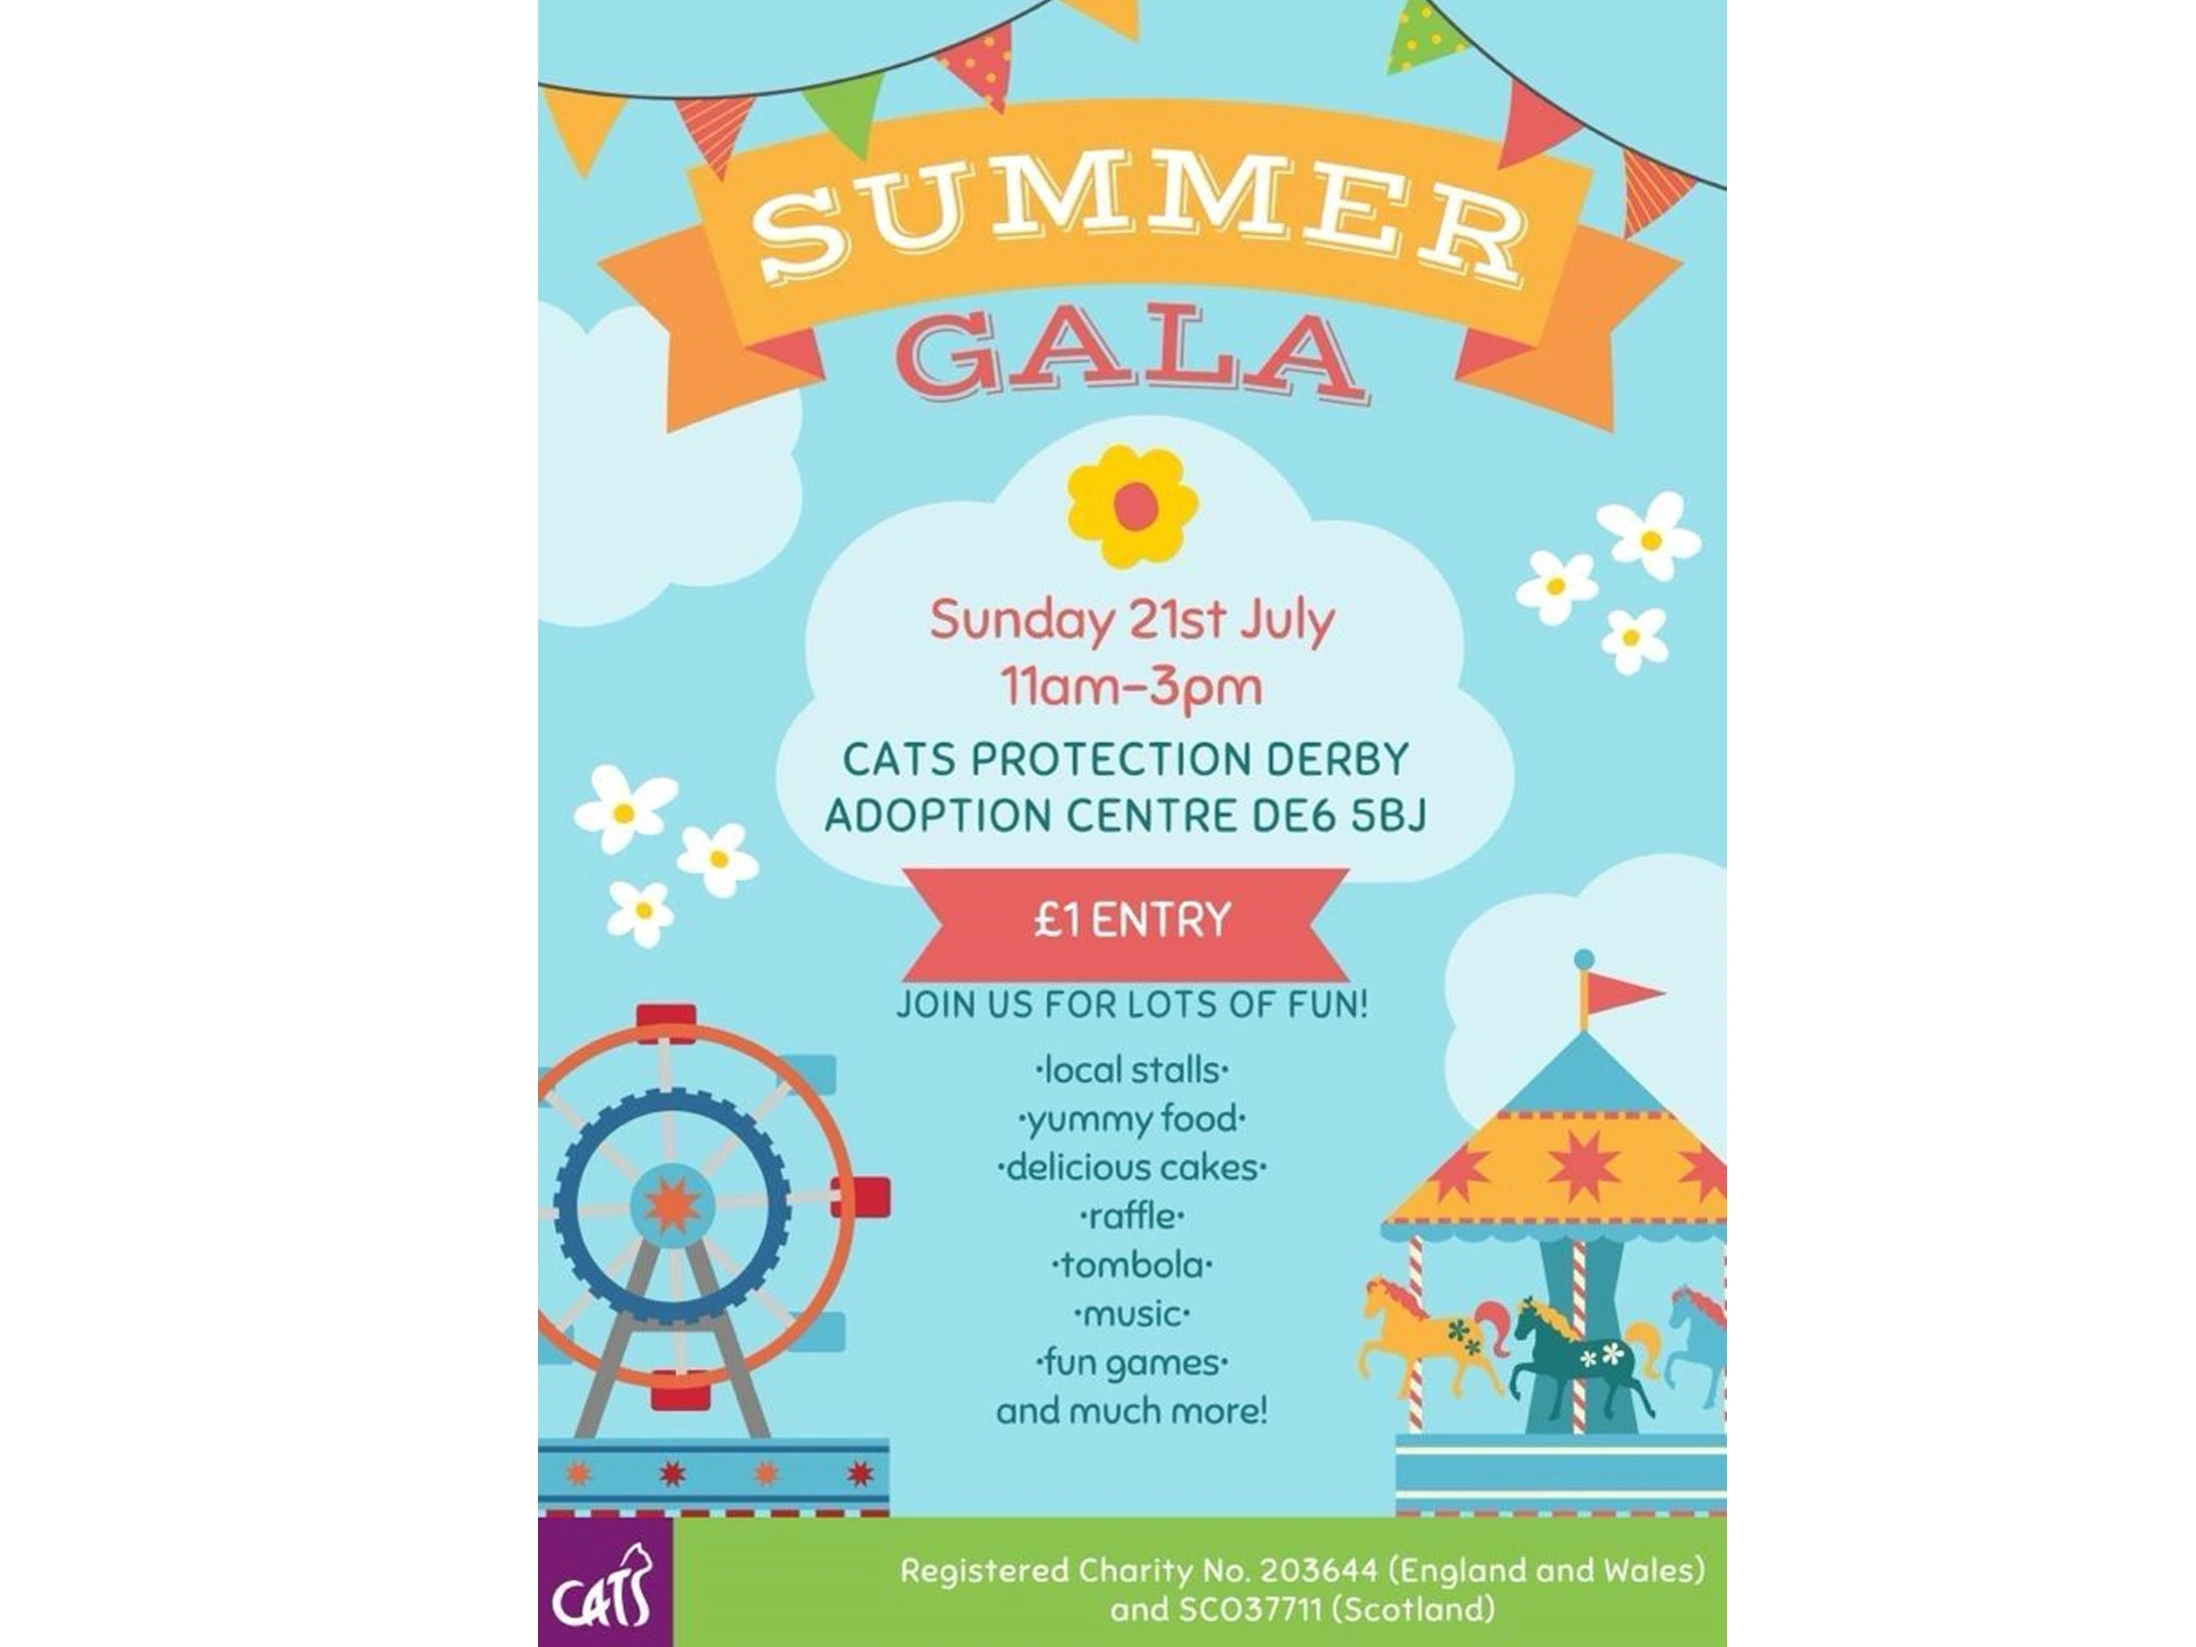 Summer Gala